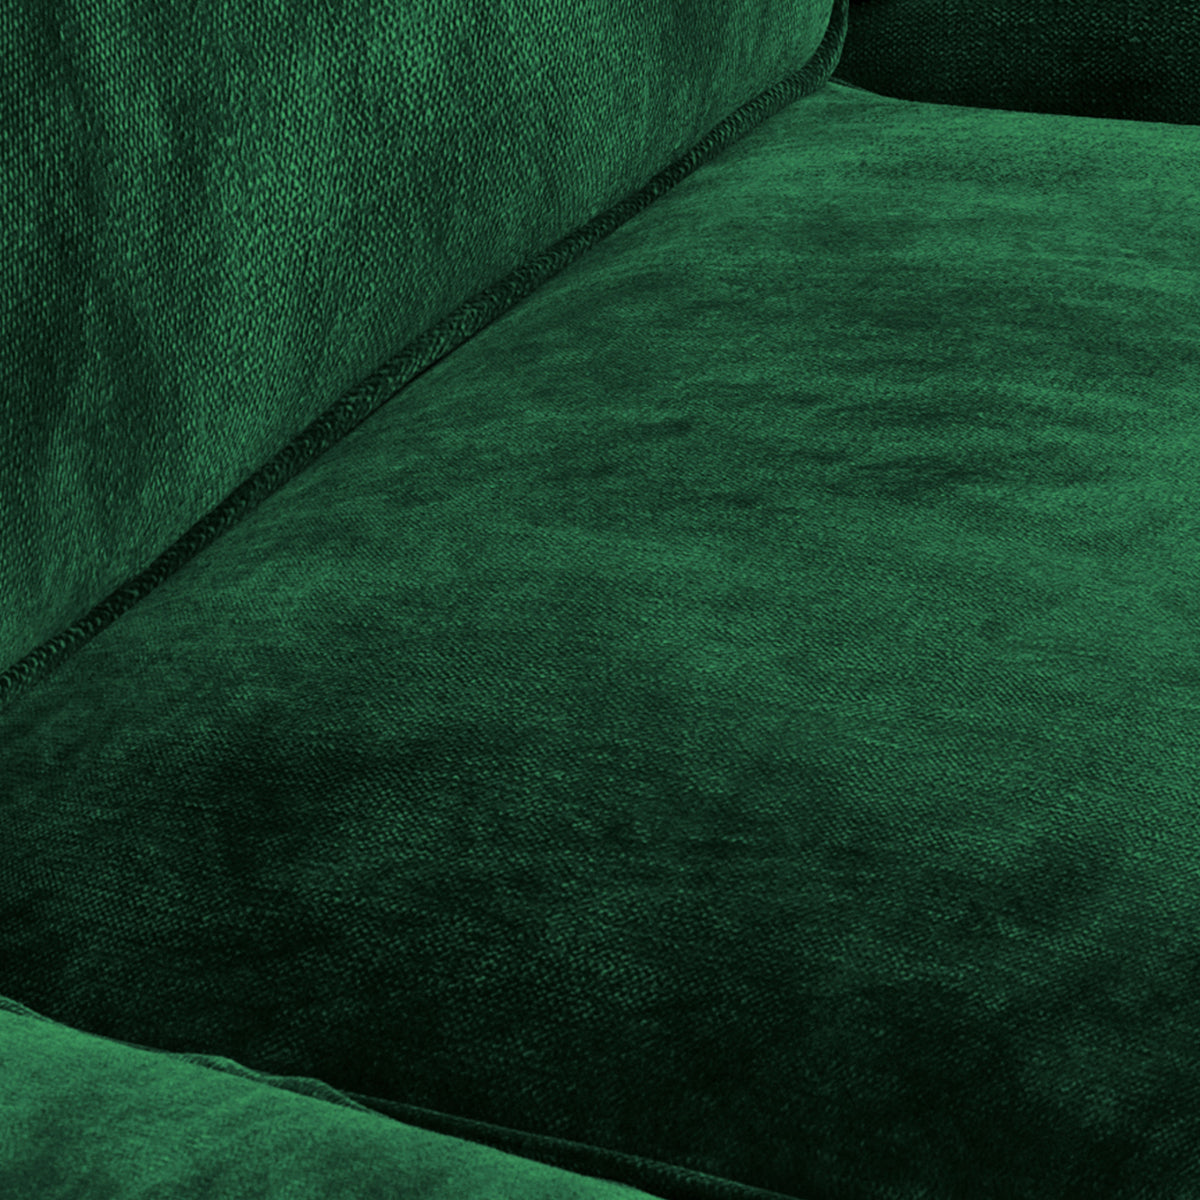 Alfie Armchair in Bottle Green by Roseland Furniture